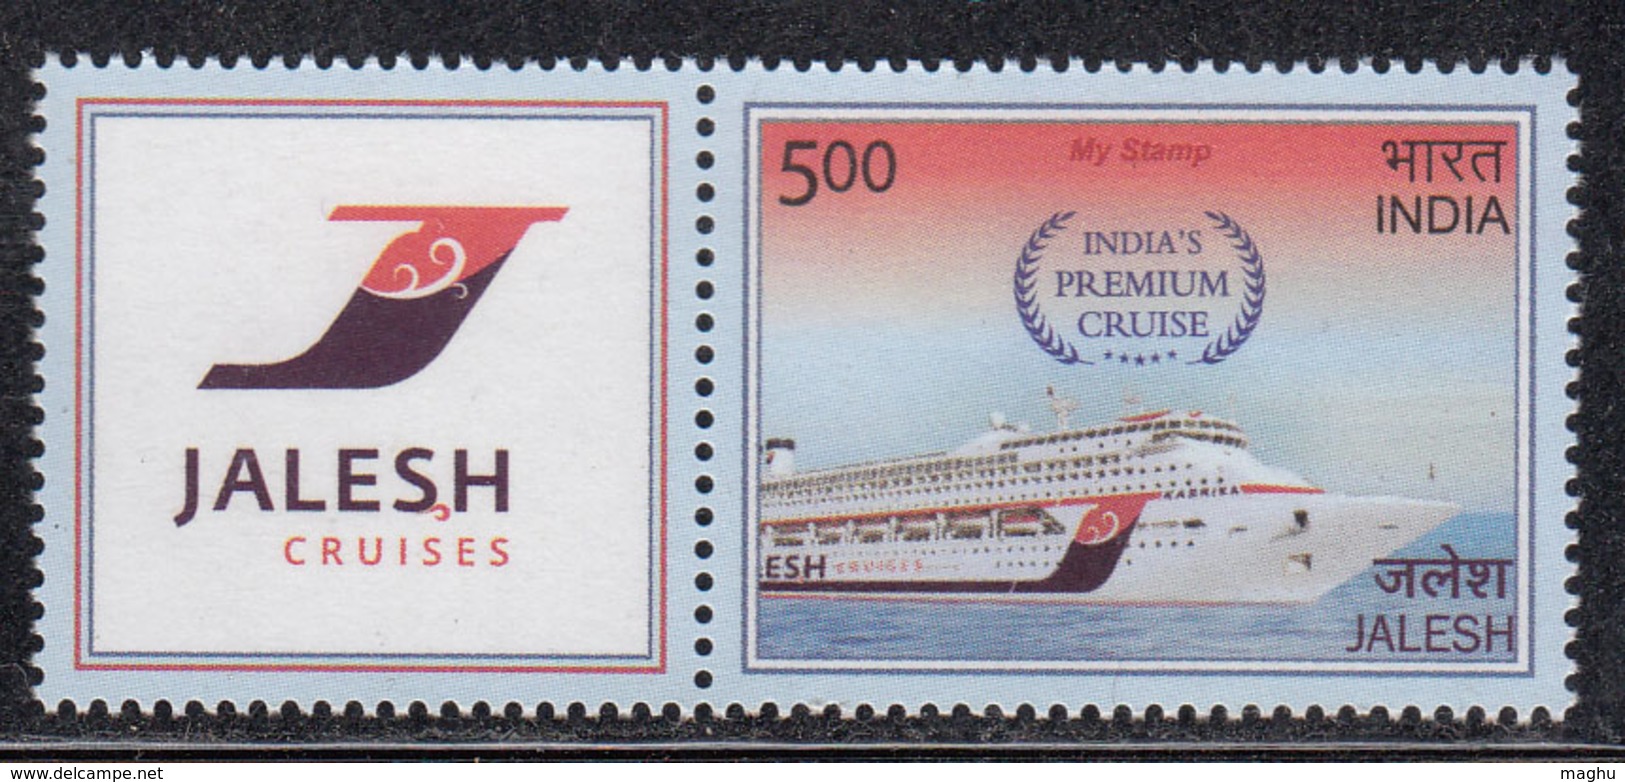 'Jalesh', India Premium Cruise, My Stamp India 2019  Ship,Transport, - Nuevos